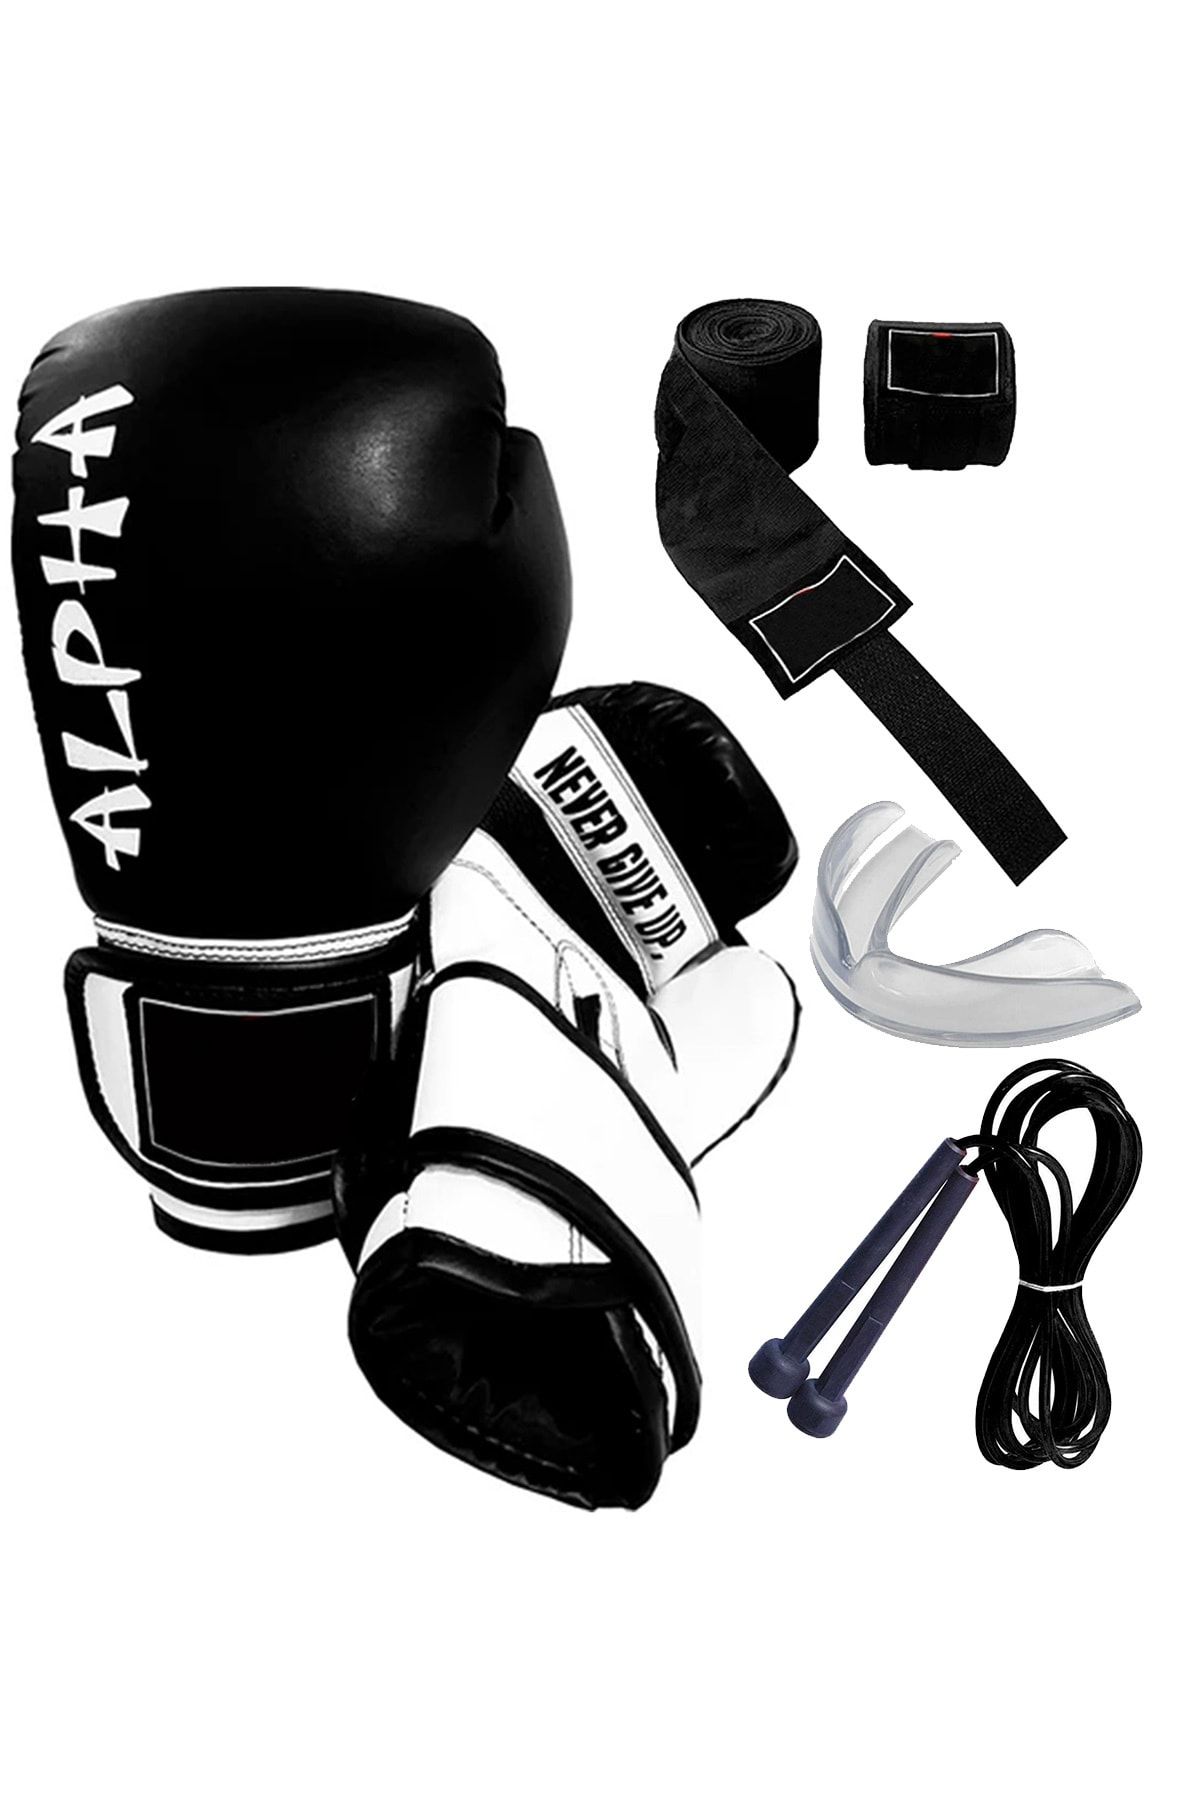 GAZELMANYA Alpha Boks Eldiveni Boxing Gloves Boks Bandajı Boks Dişliği Atlama Ipi Kick Boks Eldiven Seti